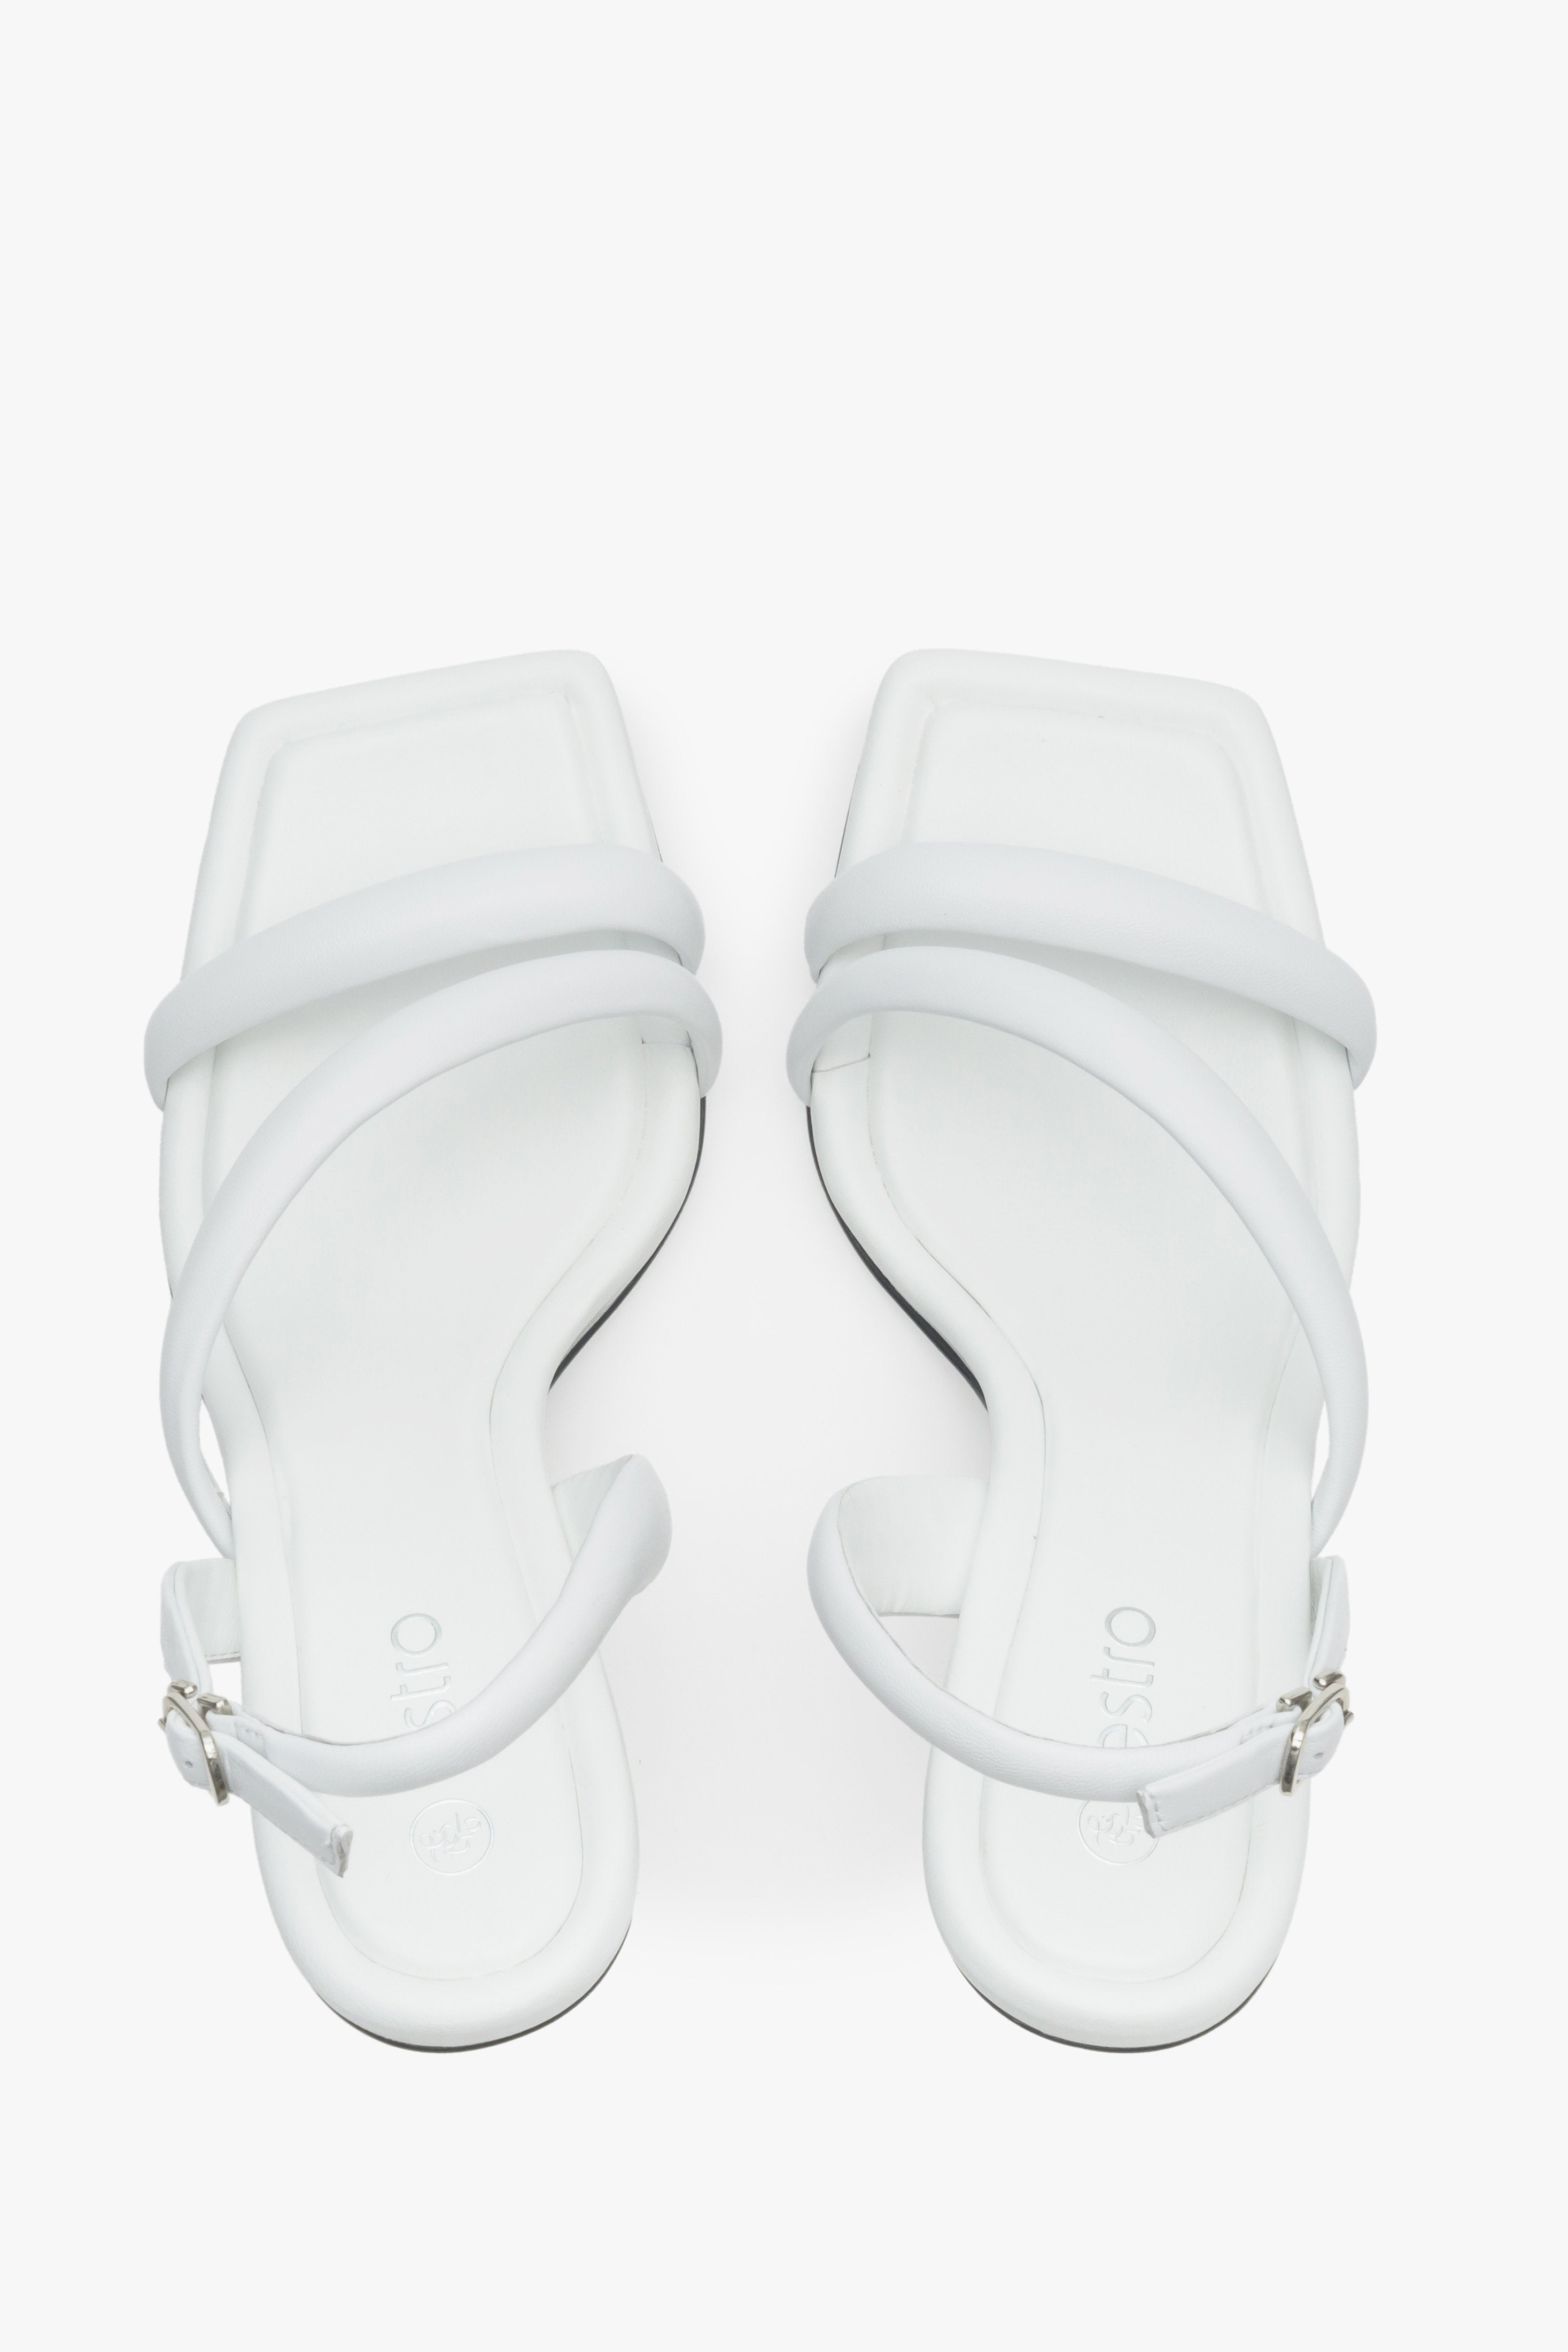 Women's soft-strap heeled sandals in white, Estro brand - presentation from above.